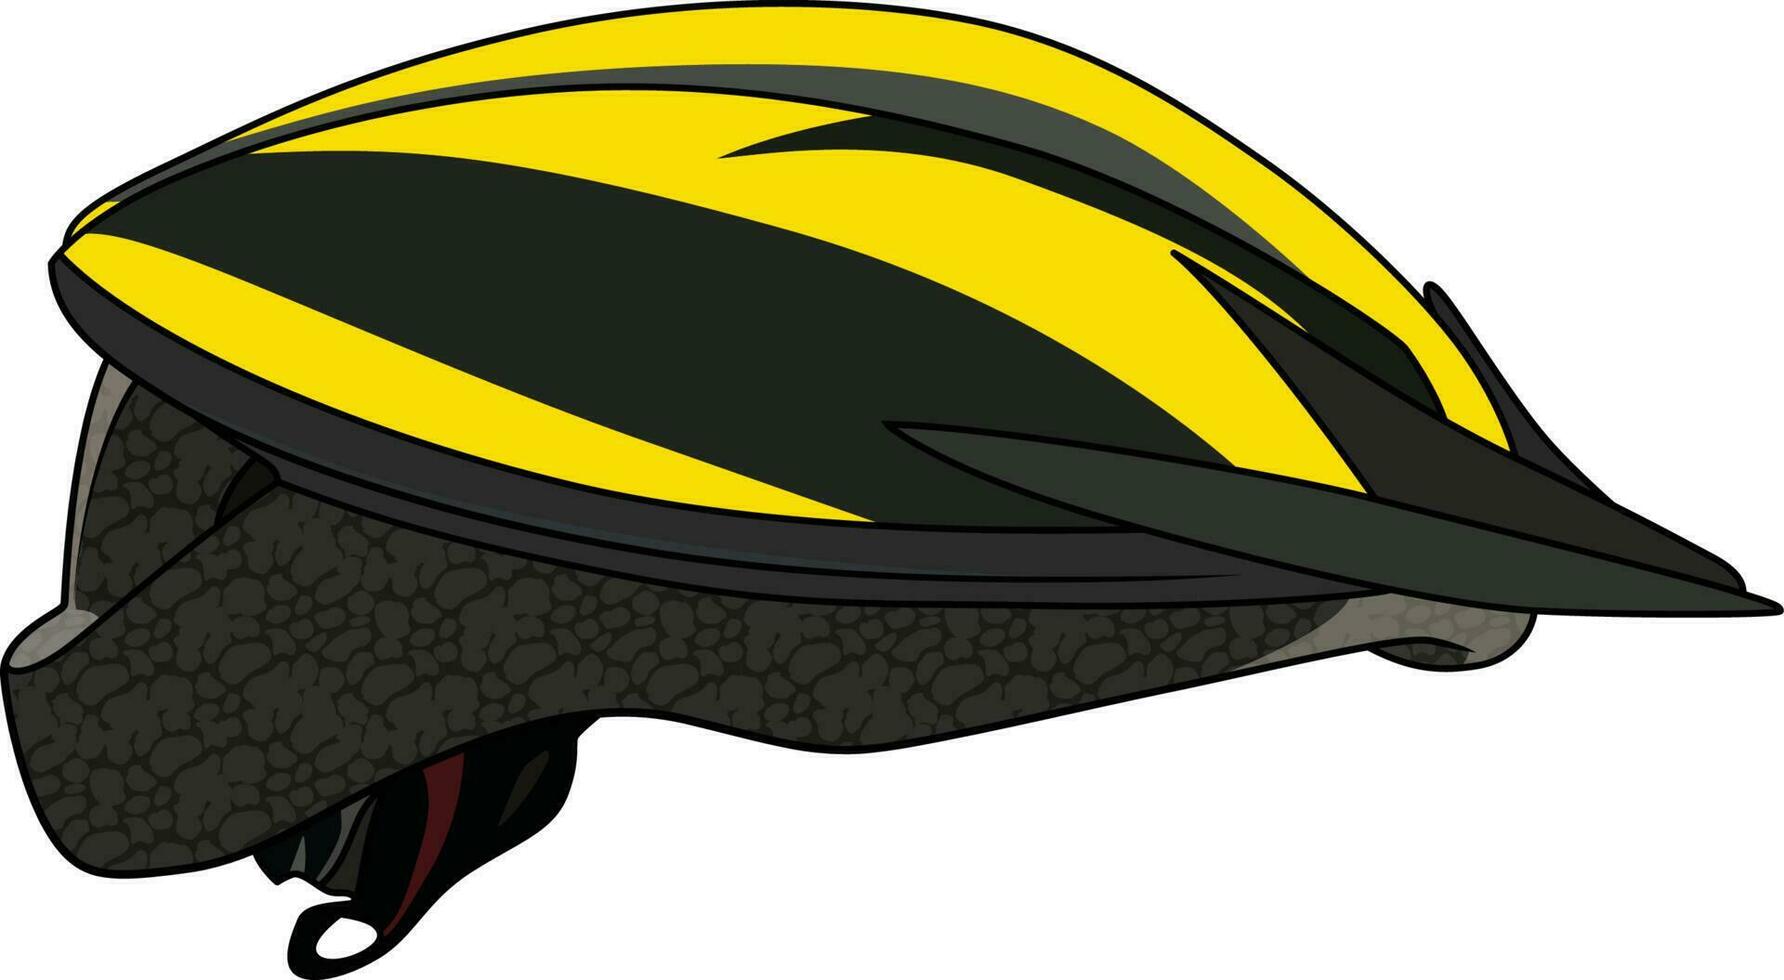 Push bicycle helmet ,Bike Helmet image  vector illustration